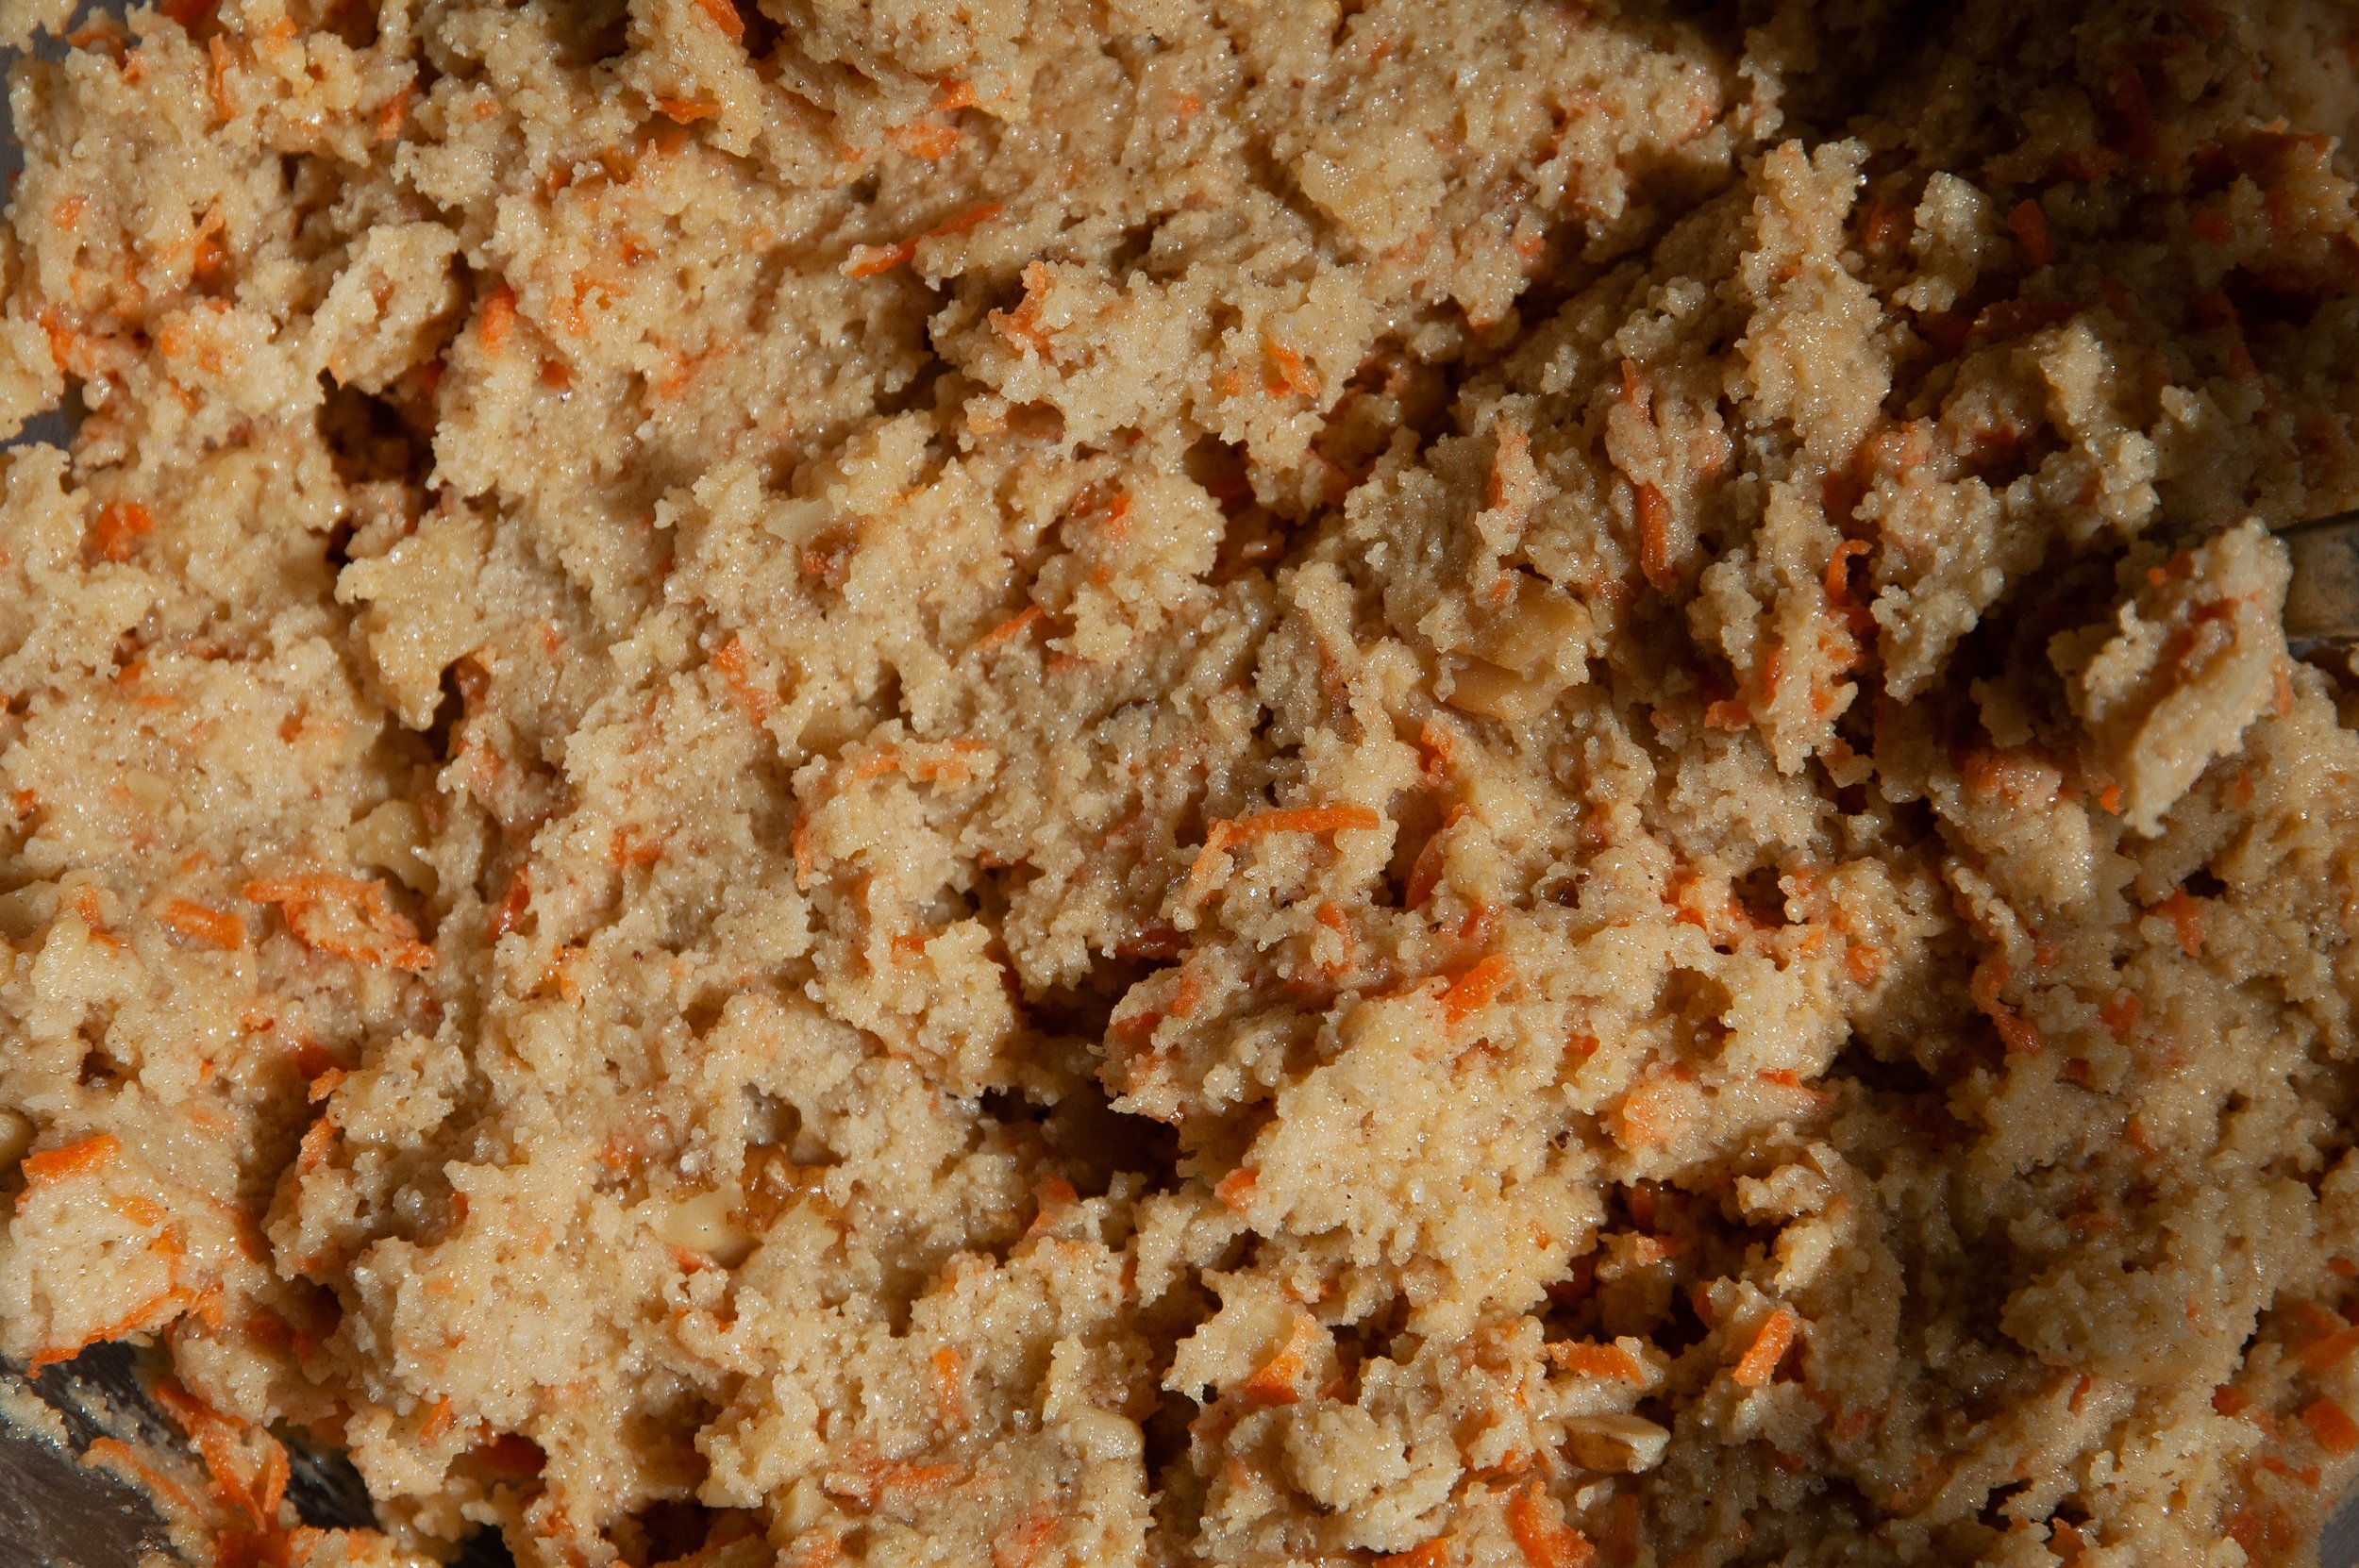 How to Make Gluten Free Carrot Cake Cookies